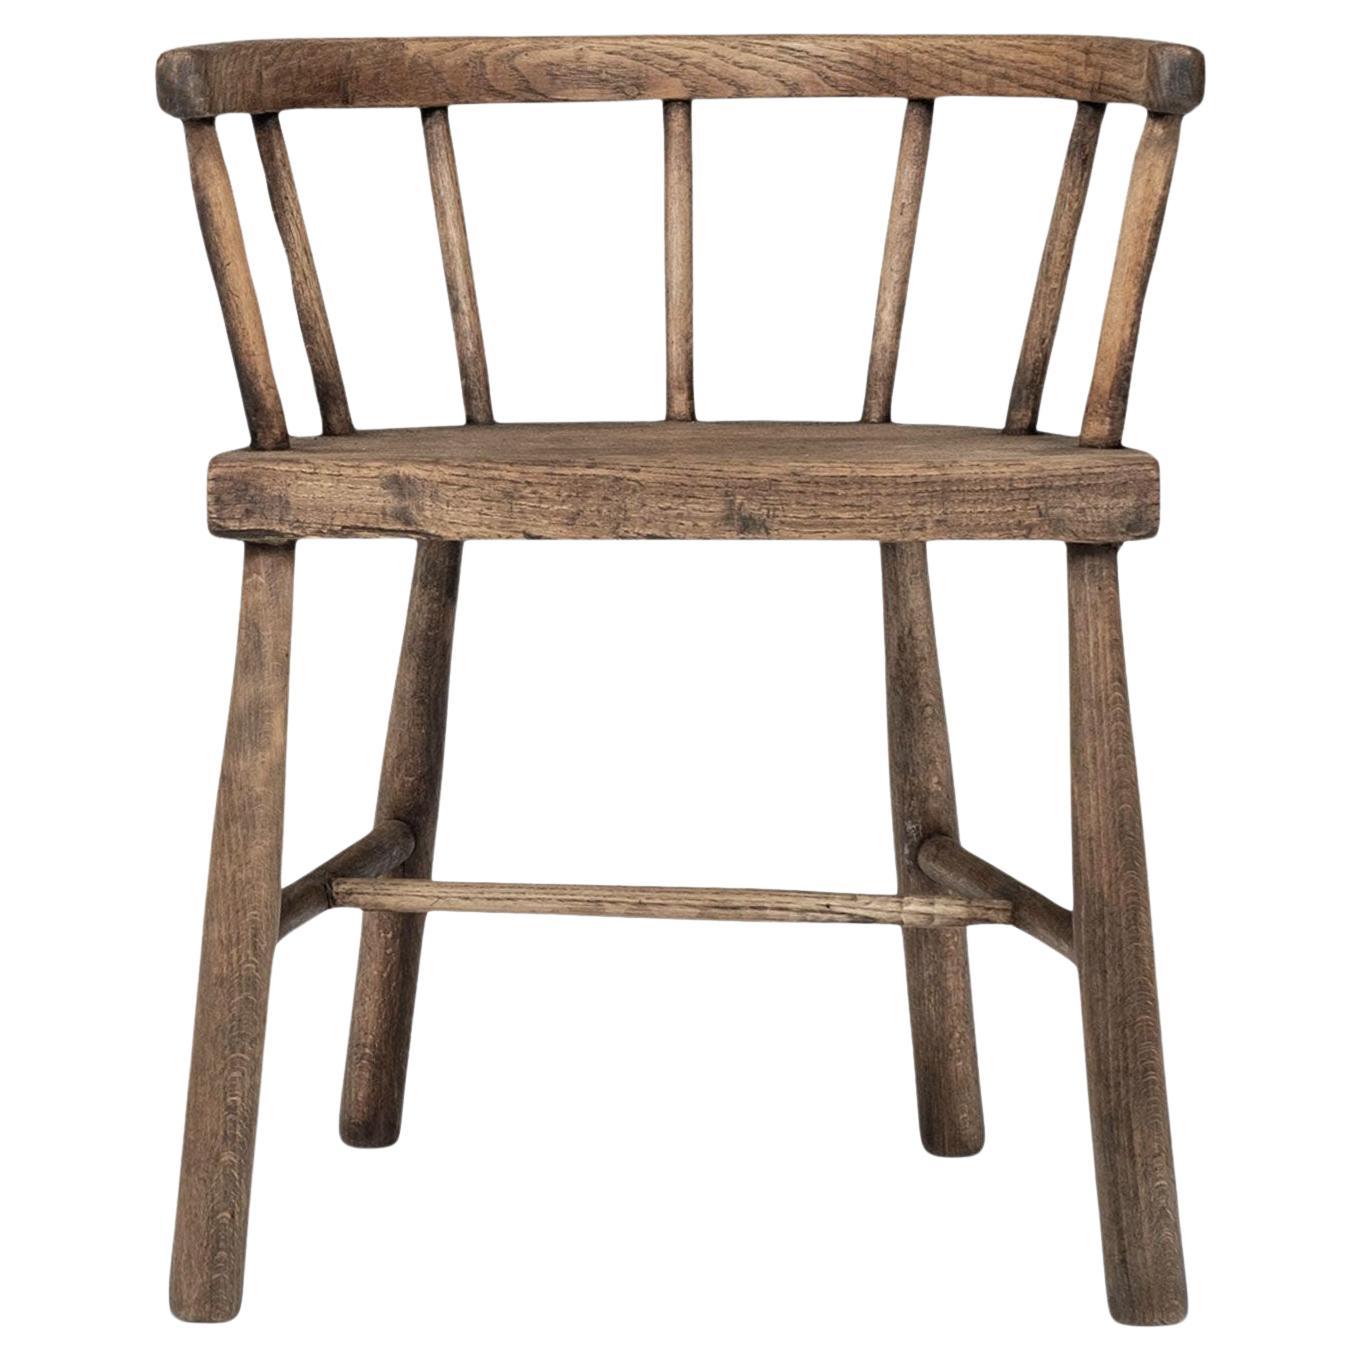 19th Century Small Vernacular Chair